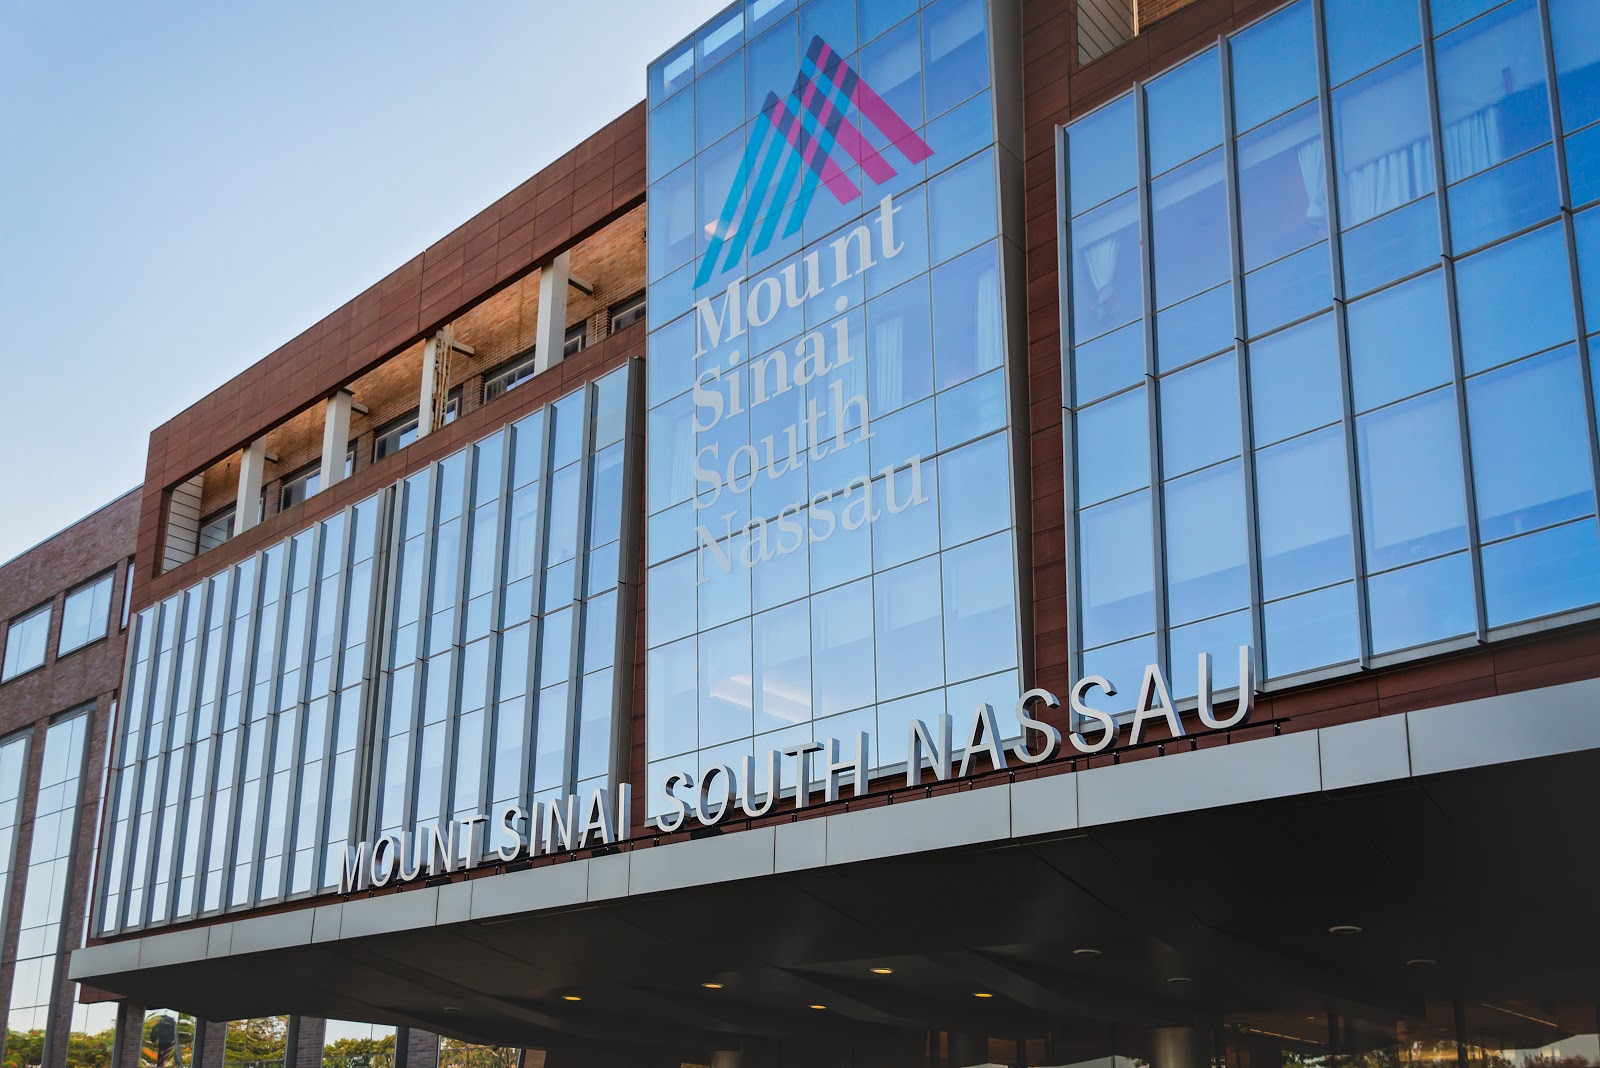 Mount Sinai South Nassau Hospital - Inpatient Psychiatric Unit